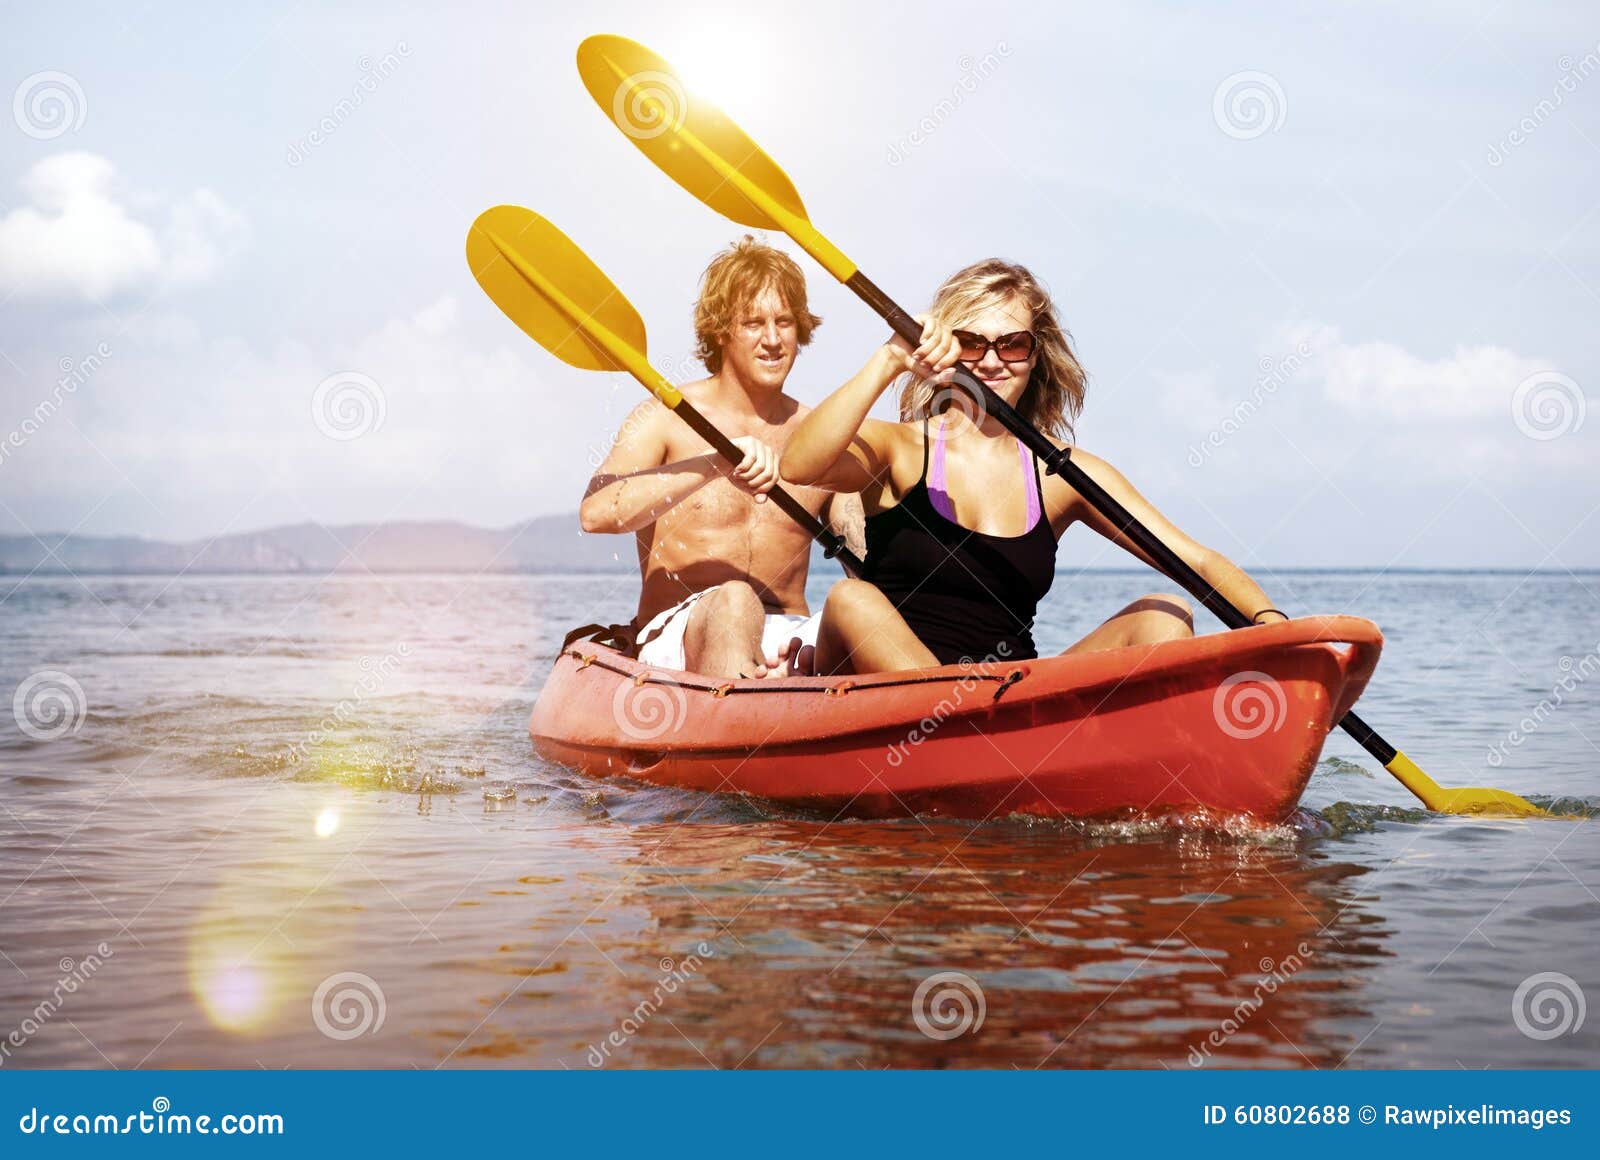 kayaking adventure happiness recreational pursuit couple concept